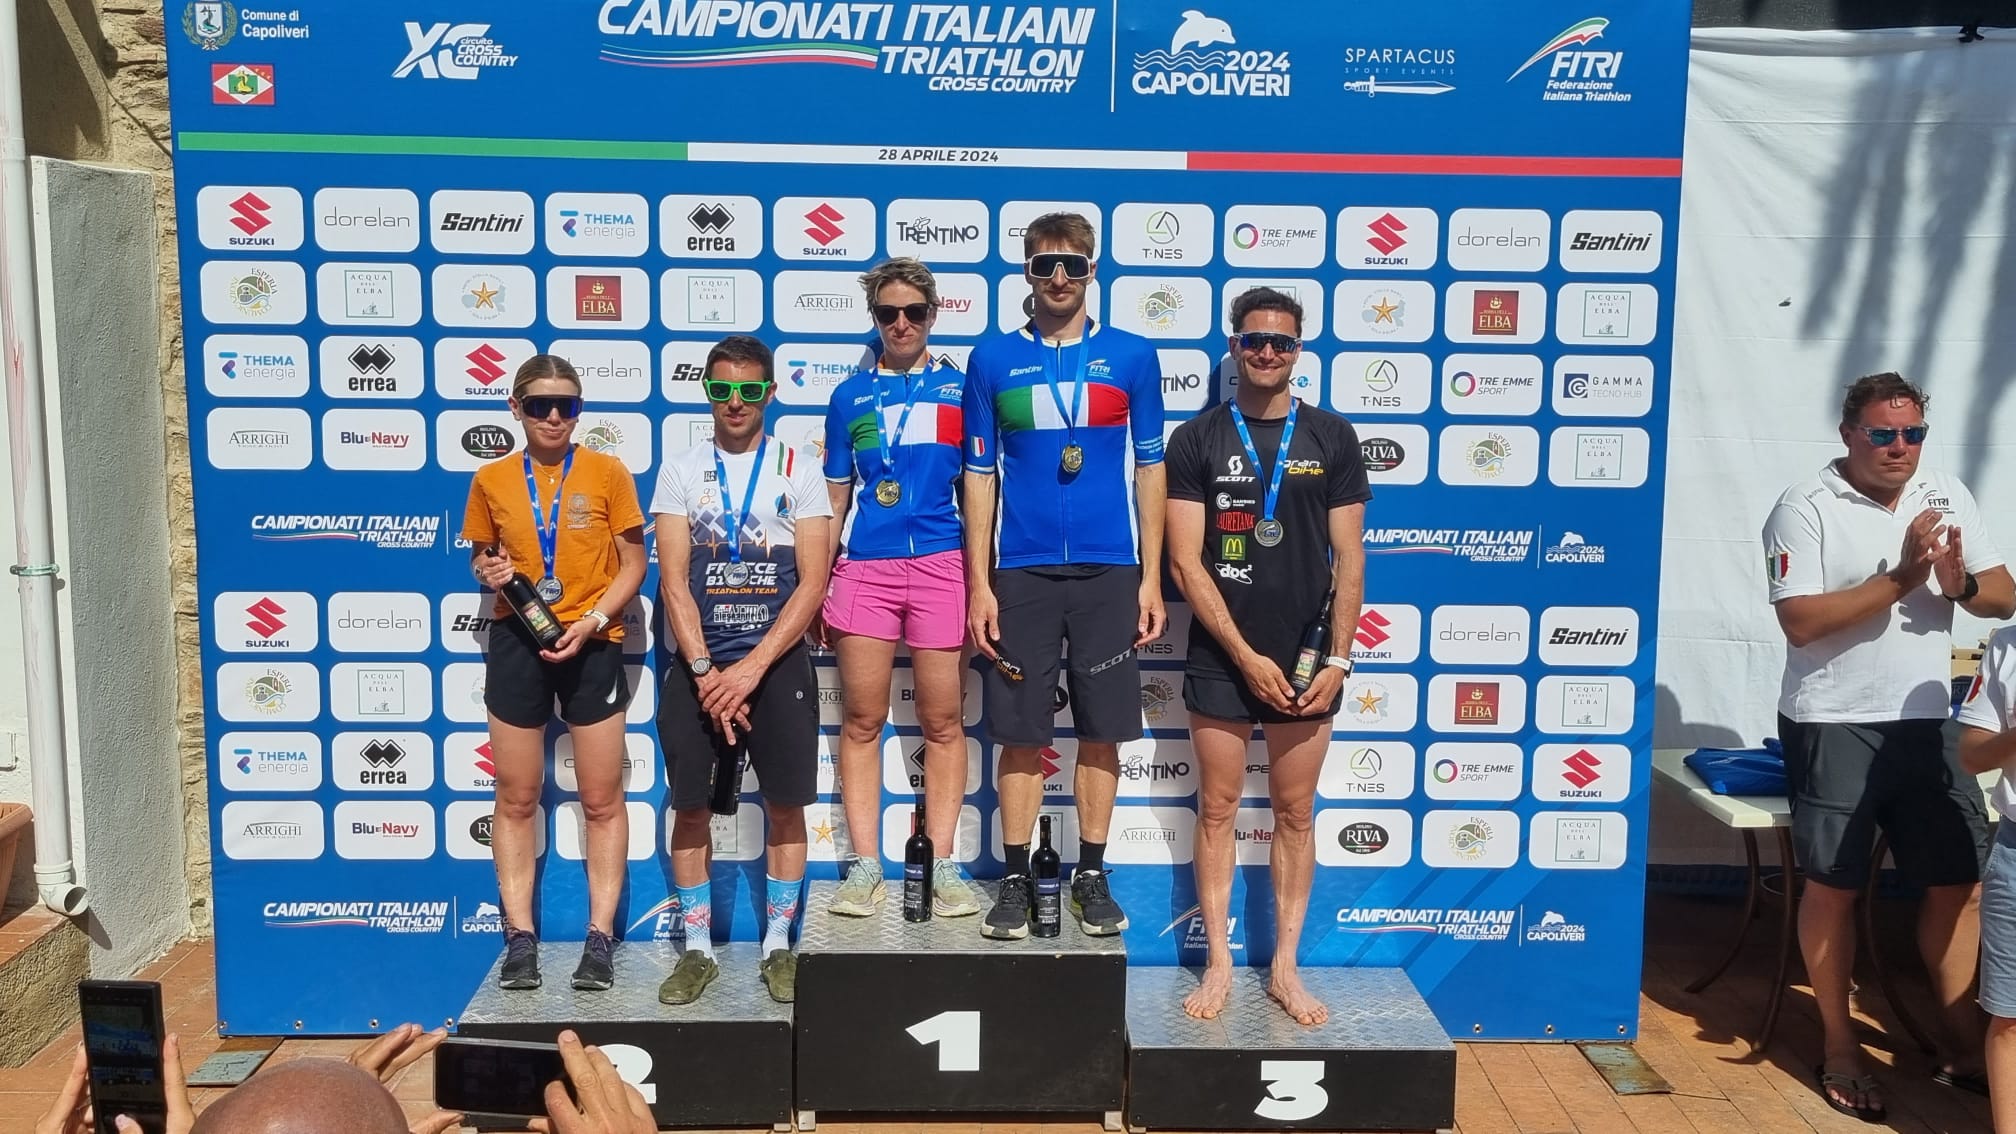 Campionati italiani triathlon Cross Country Capoliveri – Isola d’elba